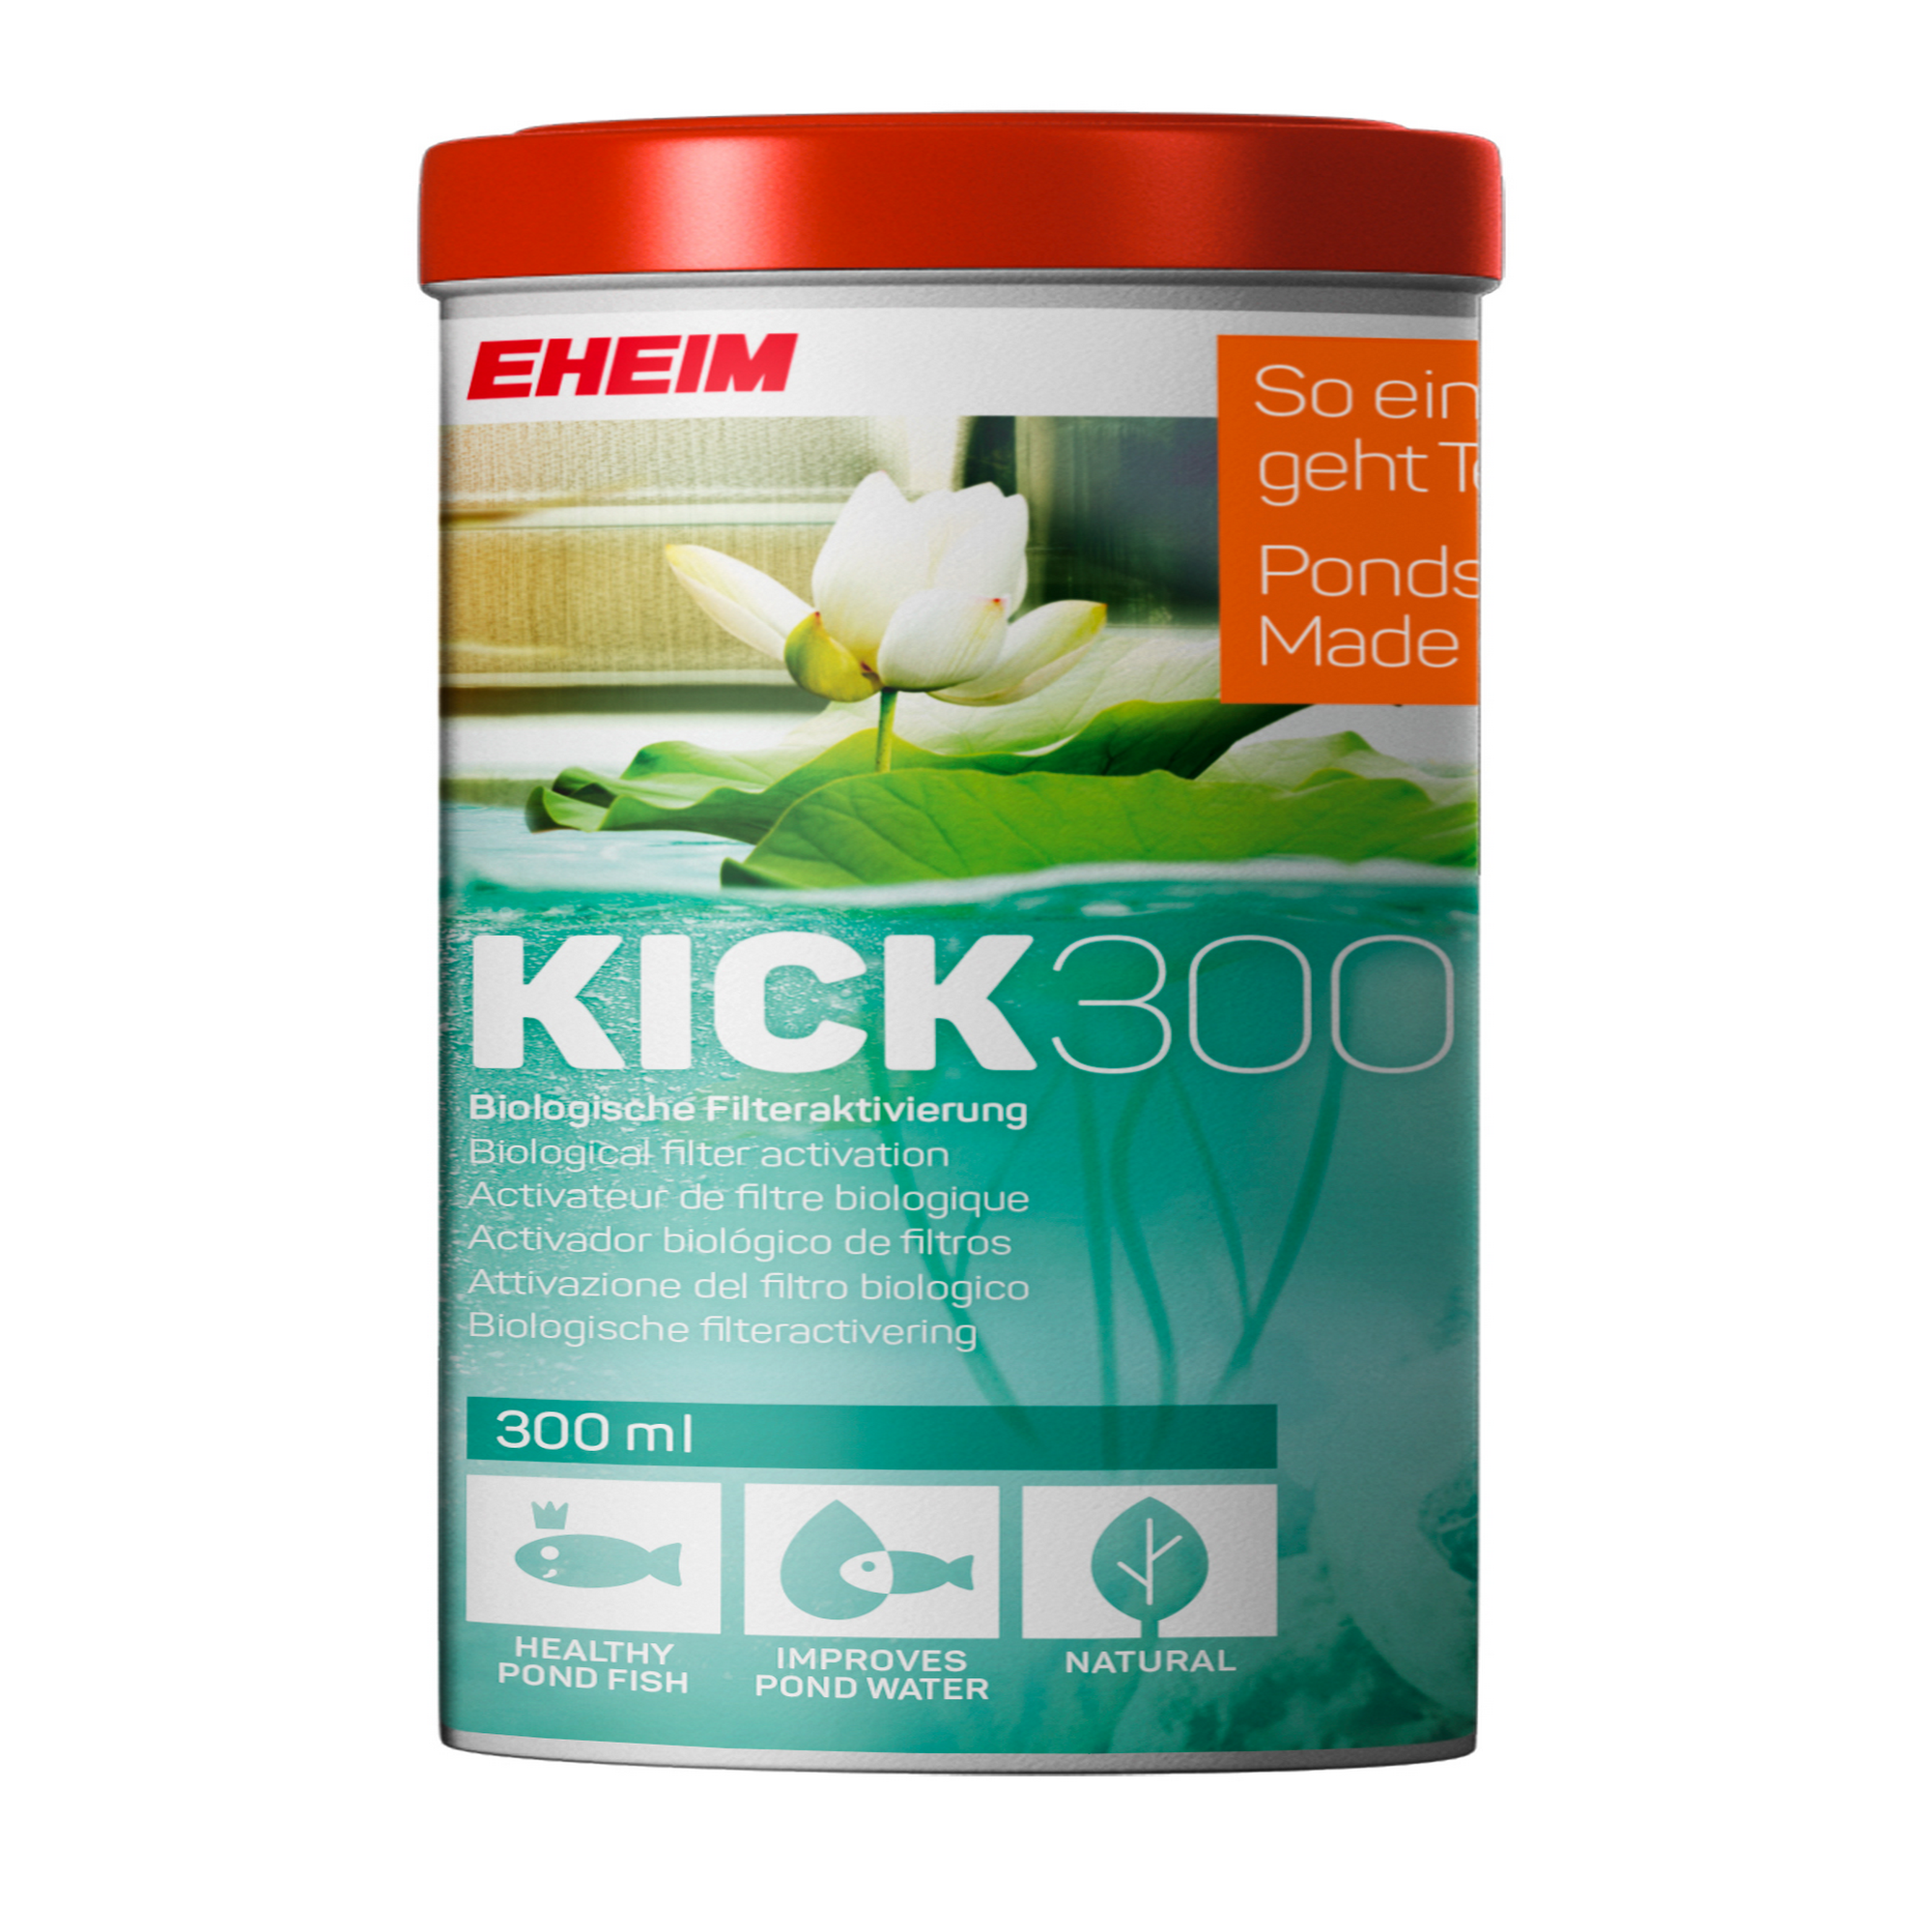 KICK 300 Biologische Filteraktivierung 300 ml + product picture